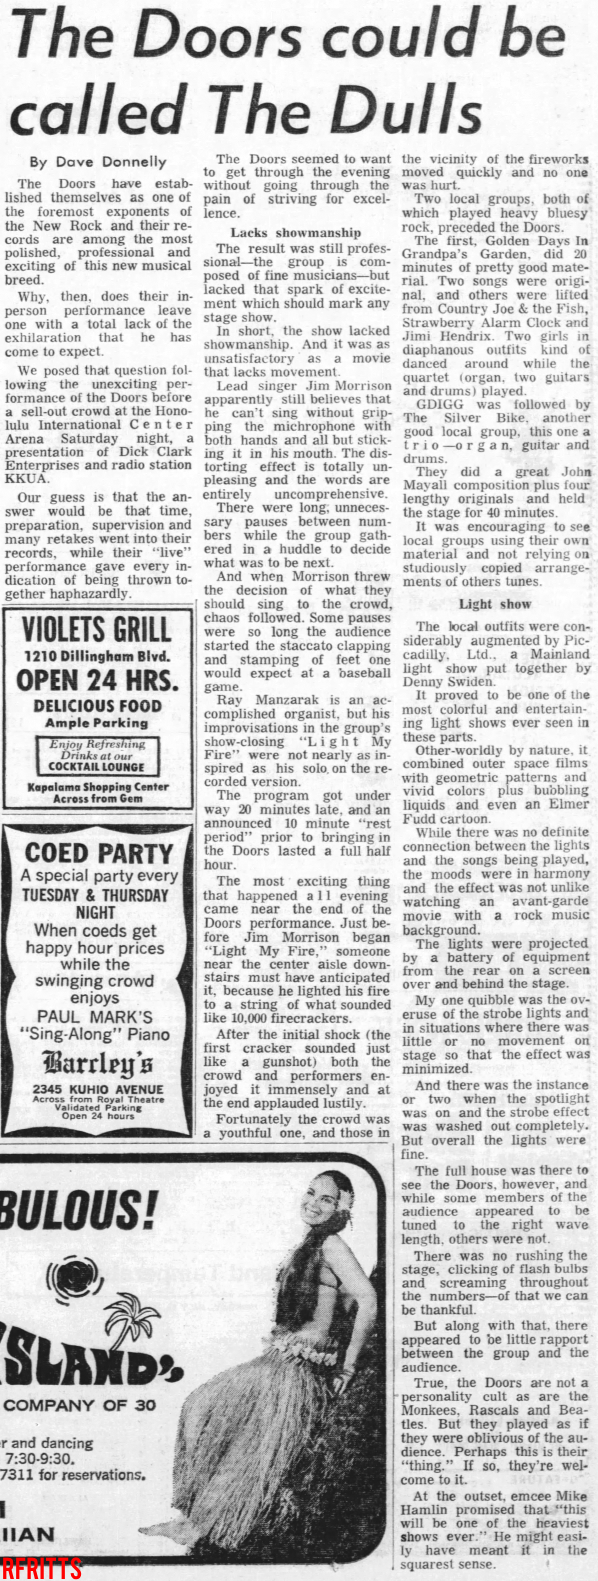 Honolulu 1968 - Review